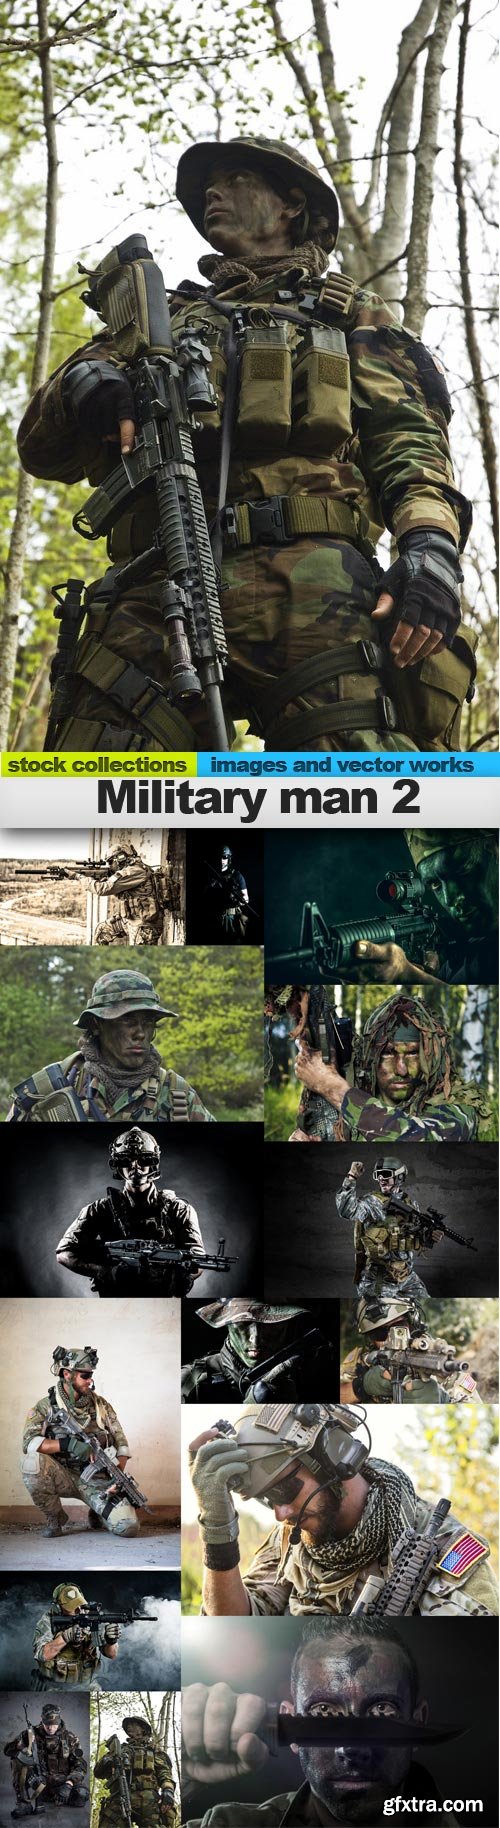 Military man 2, 15 x UHQ JPEG